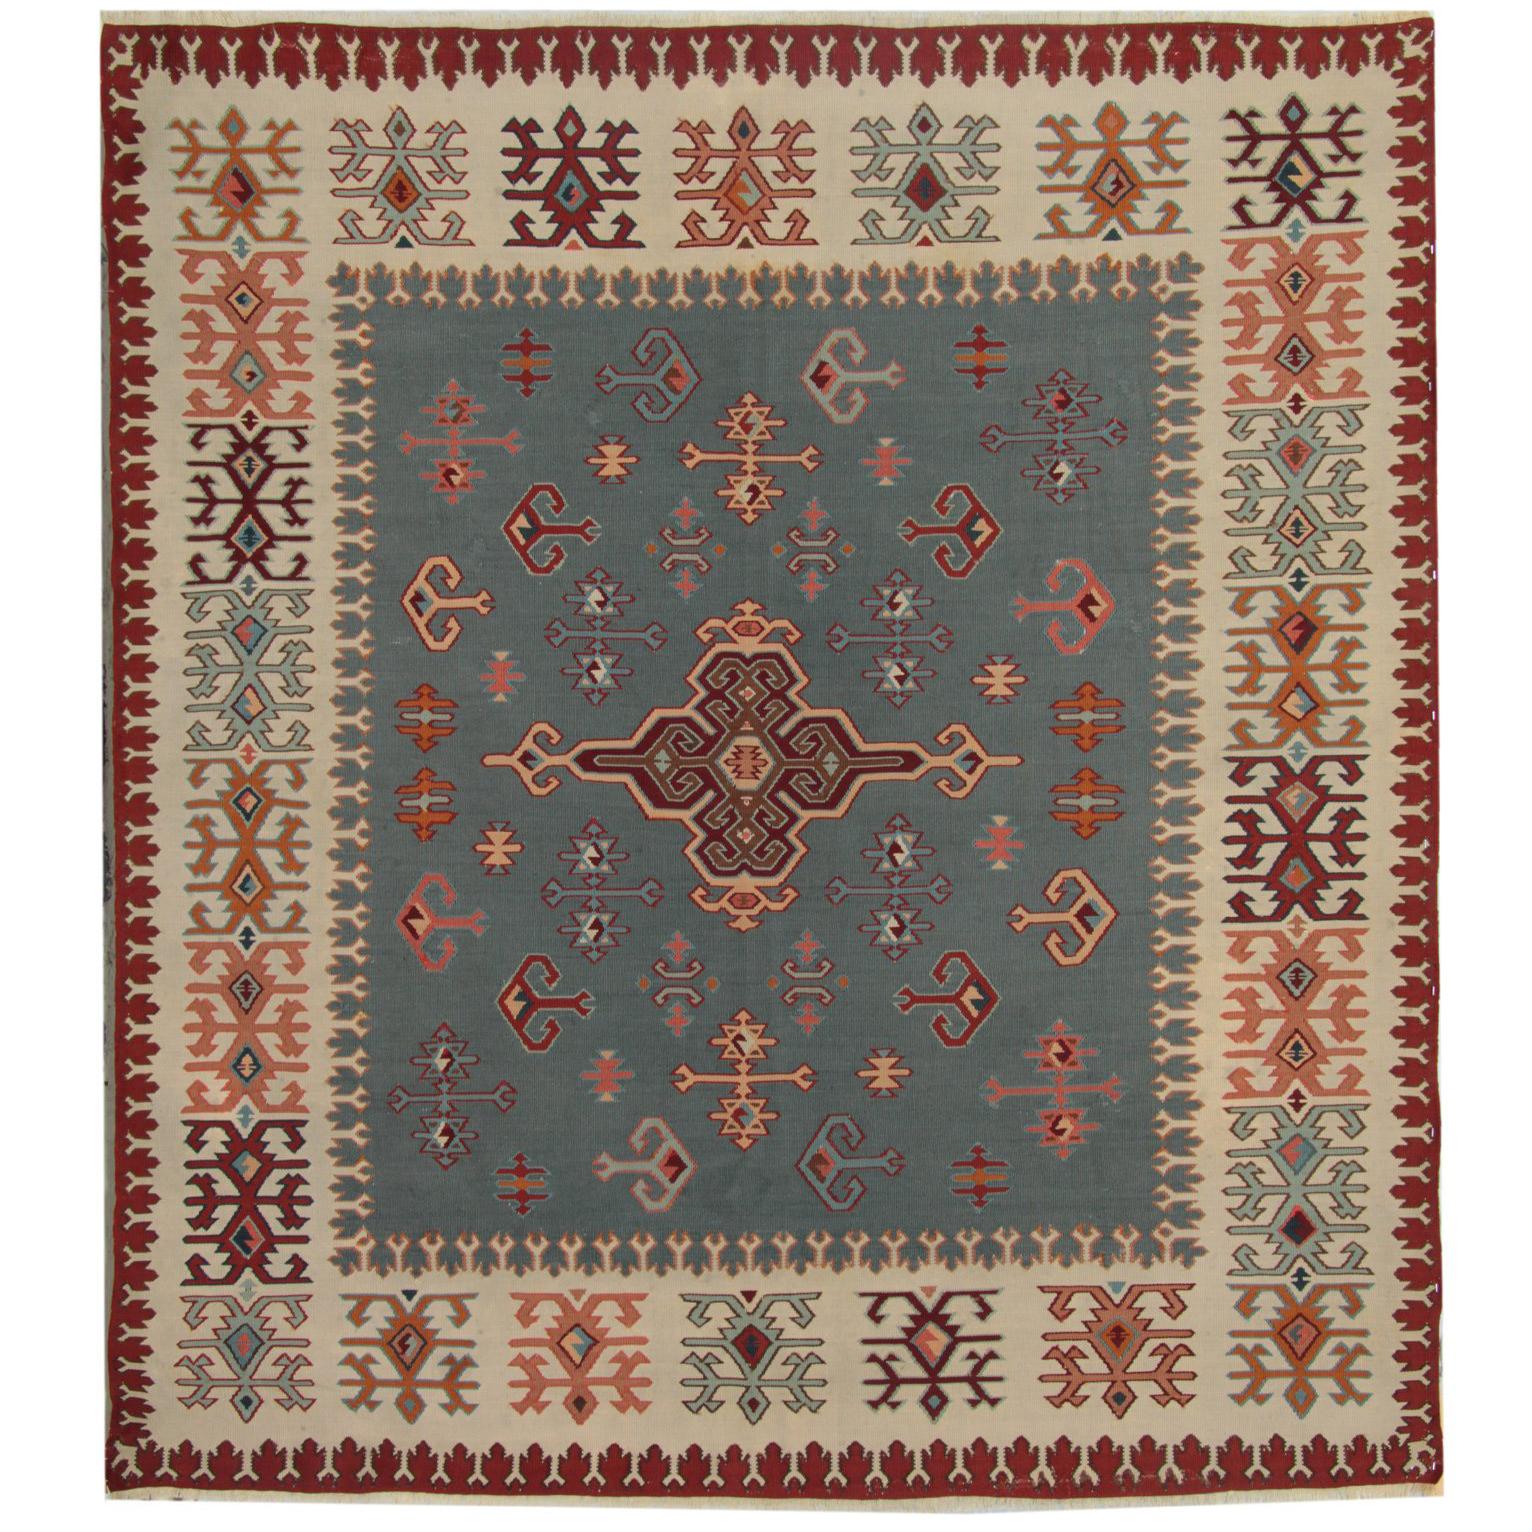 Serbian Antique Rugs, Vintage Kilim Rugs, Geometric Traditional Oriental Rug